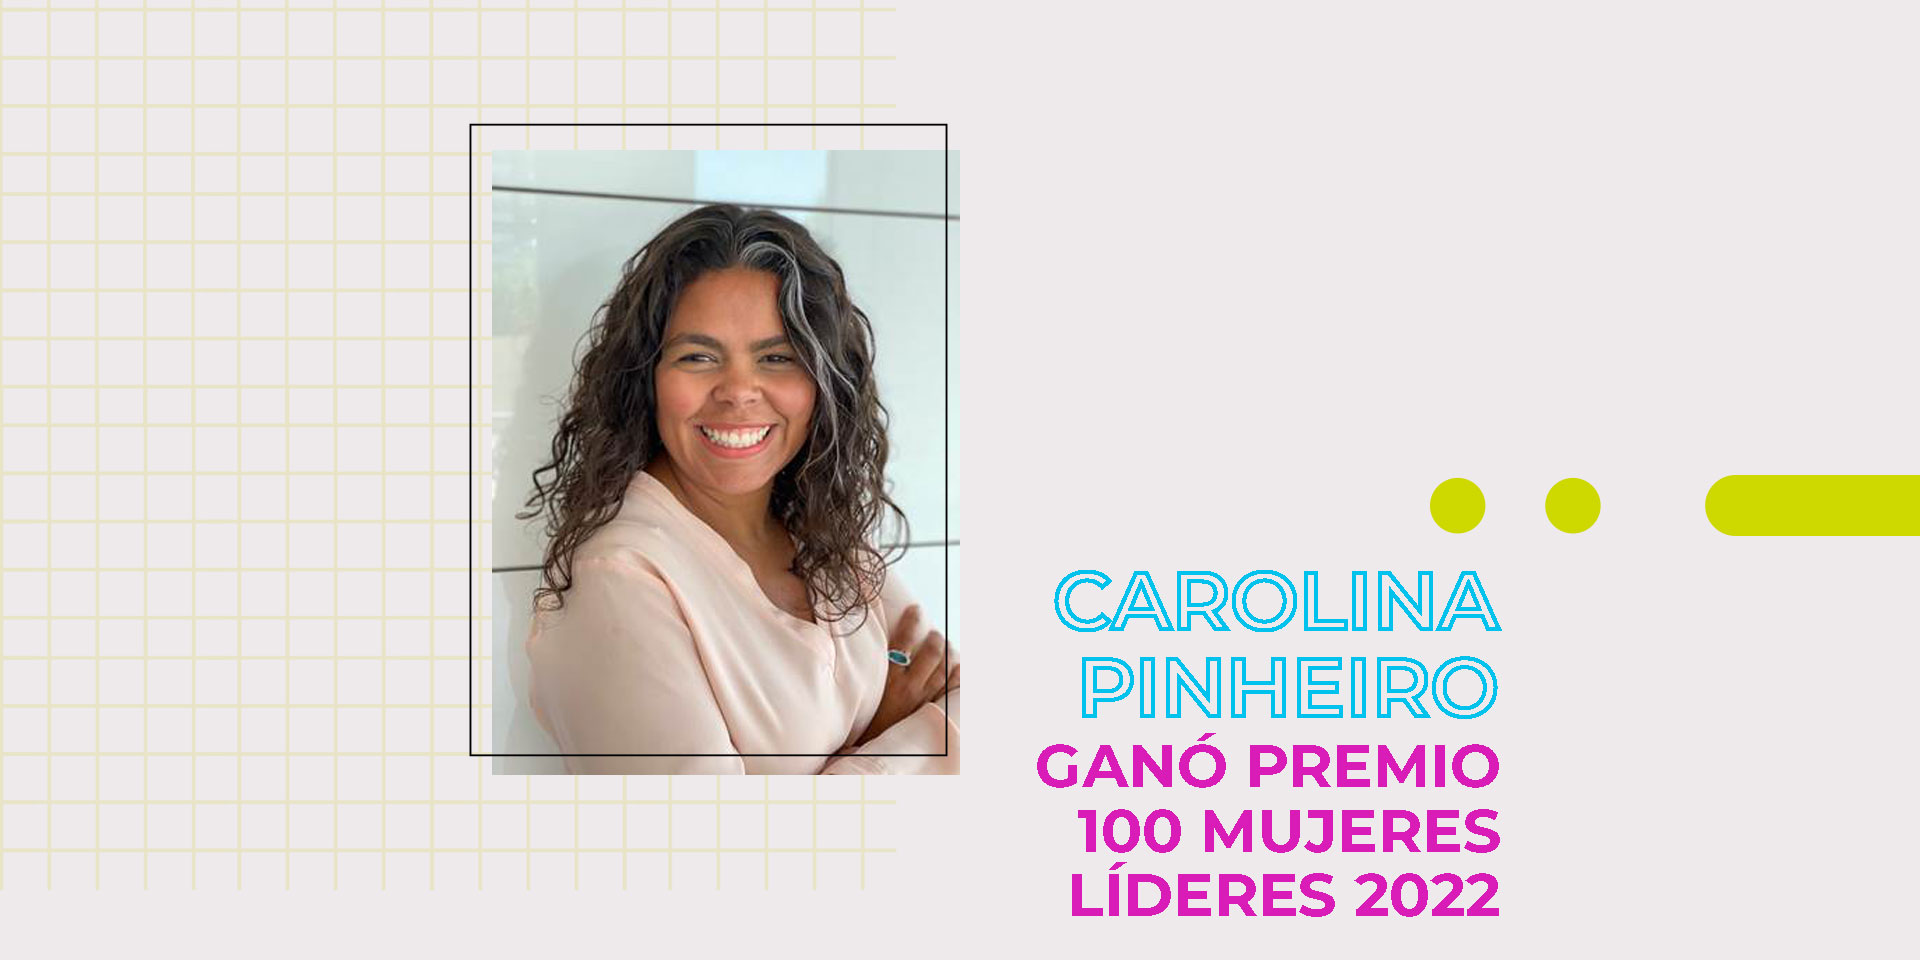 Carolina Pinheiro ganó el premio 100 Mujeres Líderes 2022￼